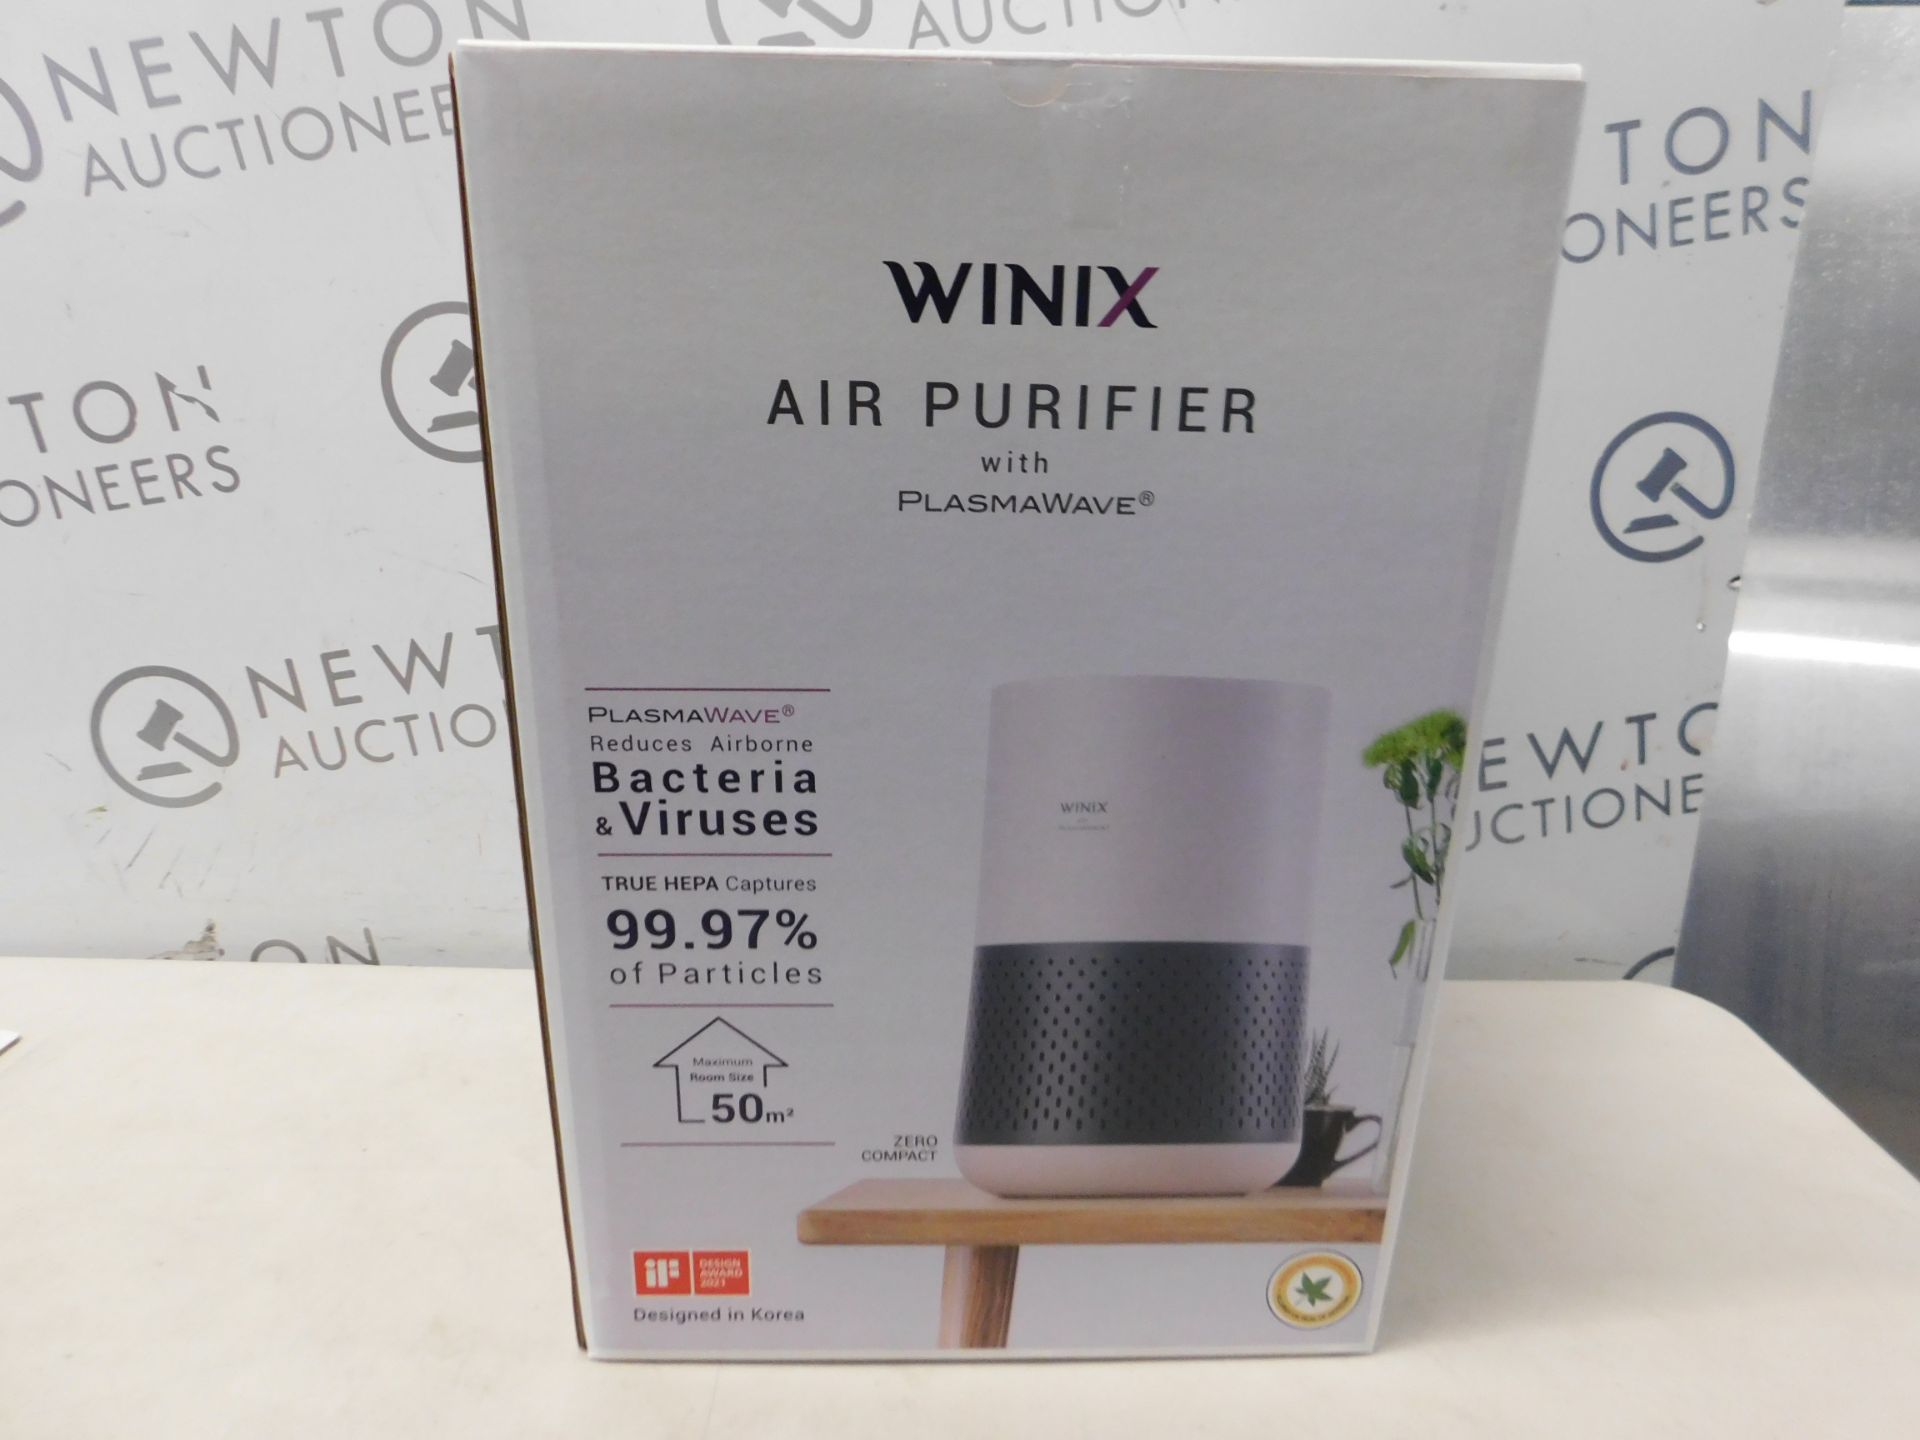 1 BOXED WINIX ZERO COMPACT AIR PURIFIER 1022-0226-07, 50M RRP Â£119.99